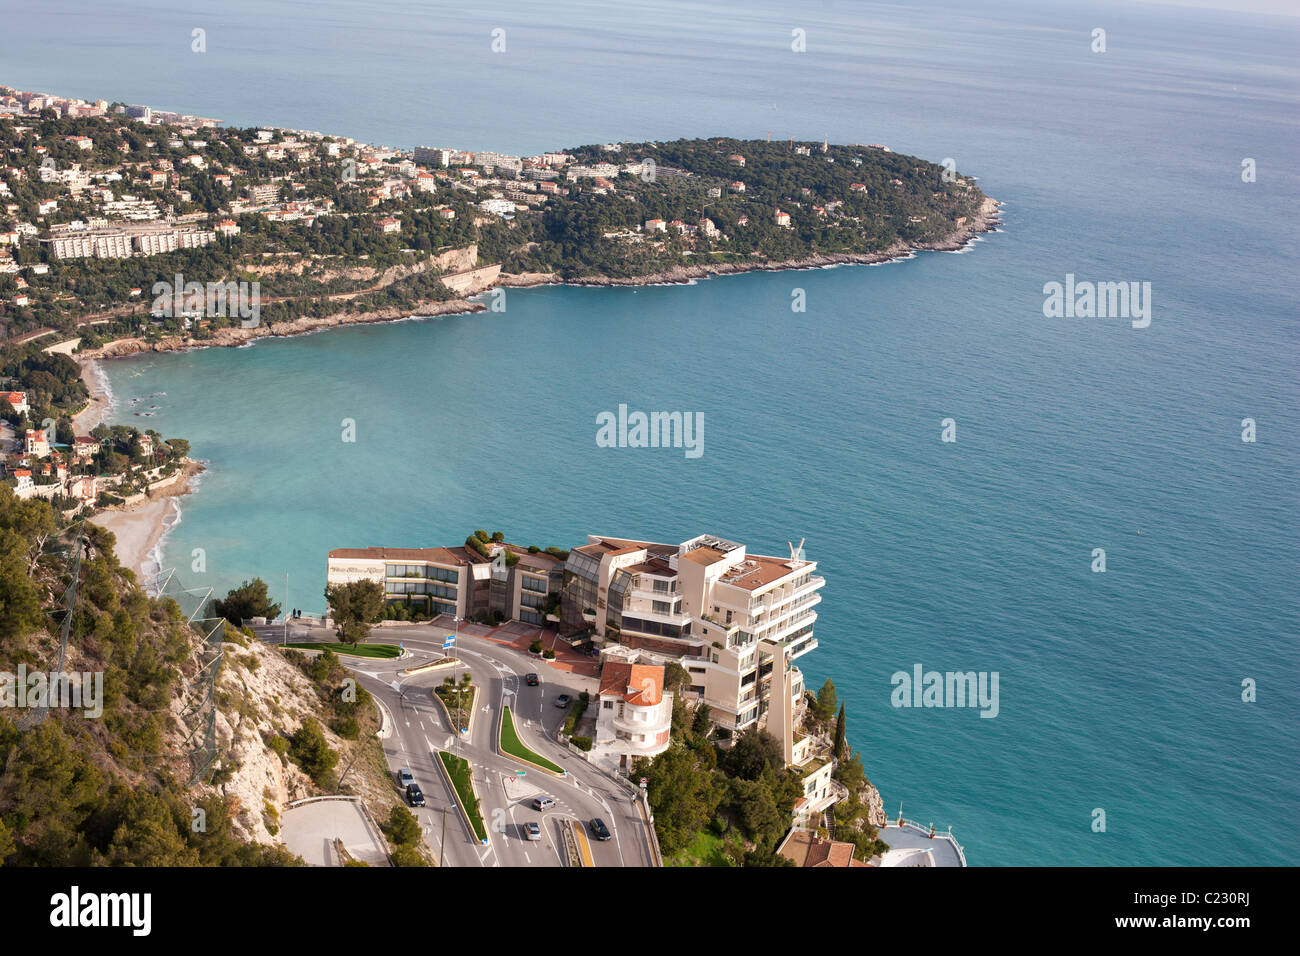 VISTA AEREA. Hotel su una sporgenza rocciosa a 300 metri sopra il Mar Mediterraneo. Vista Palace Hotel, Roquebrune-Cap-Martin, Francia. Foto Stock